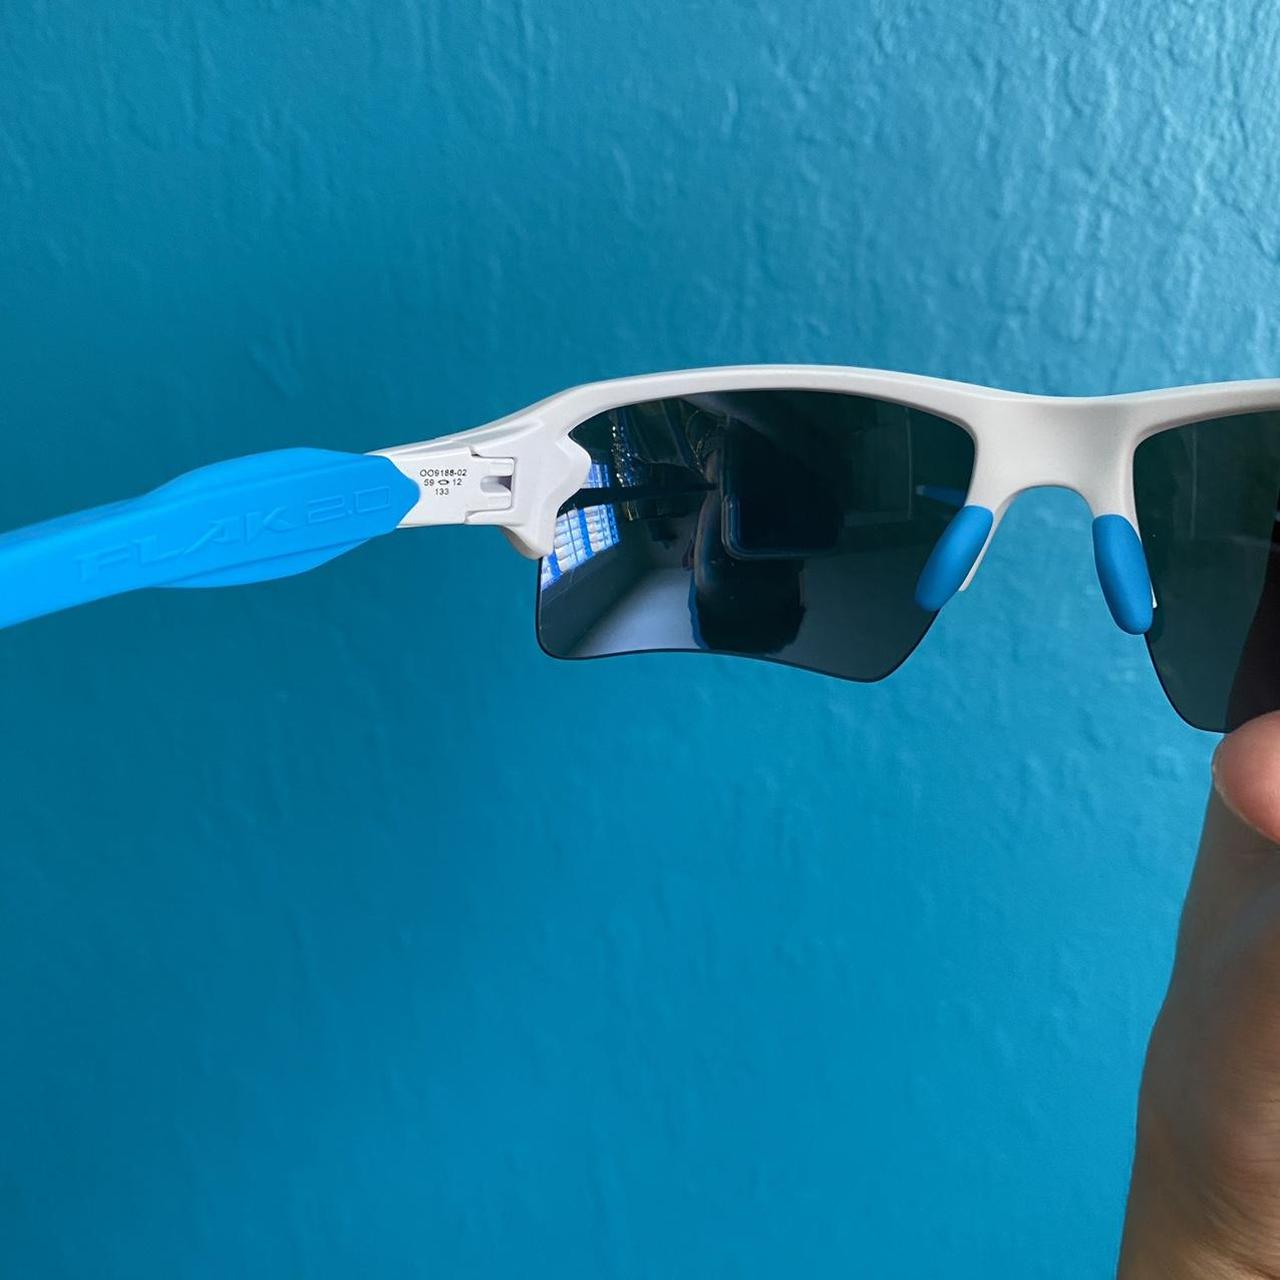 New Oakley Flaked Sunglasses